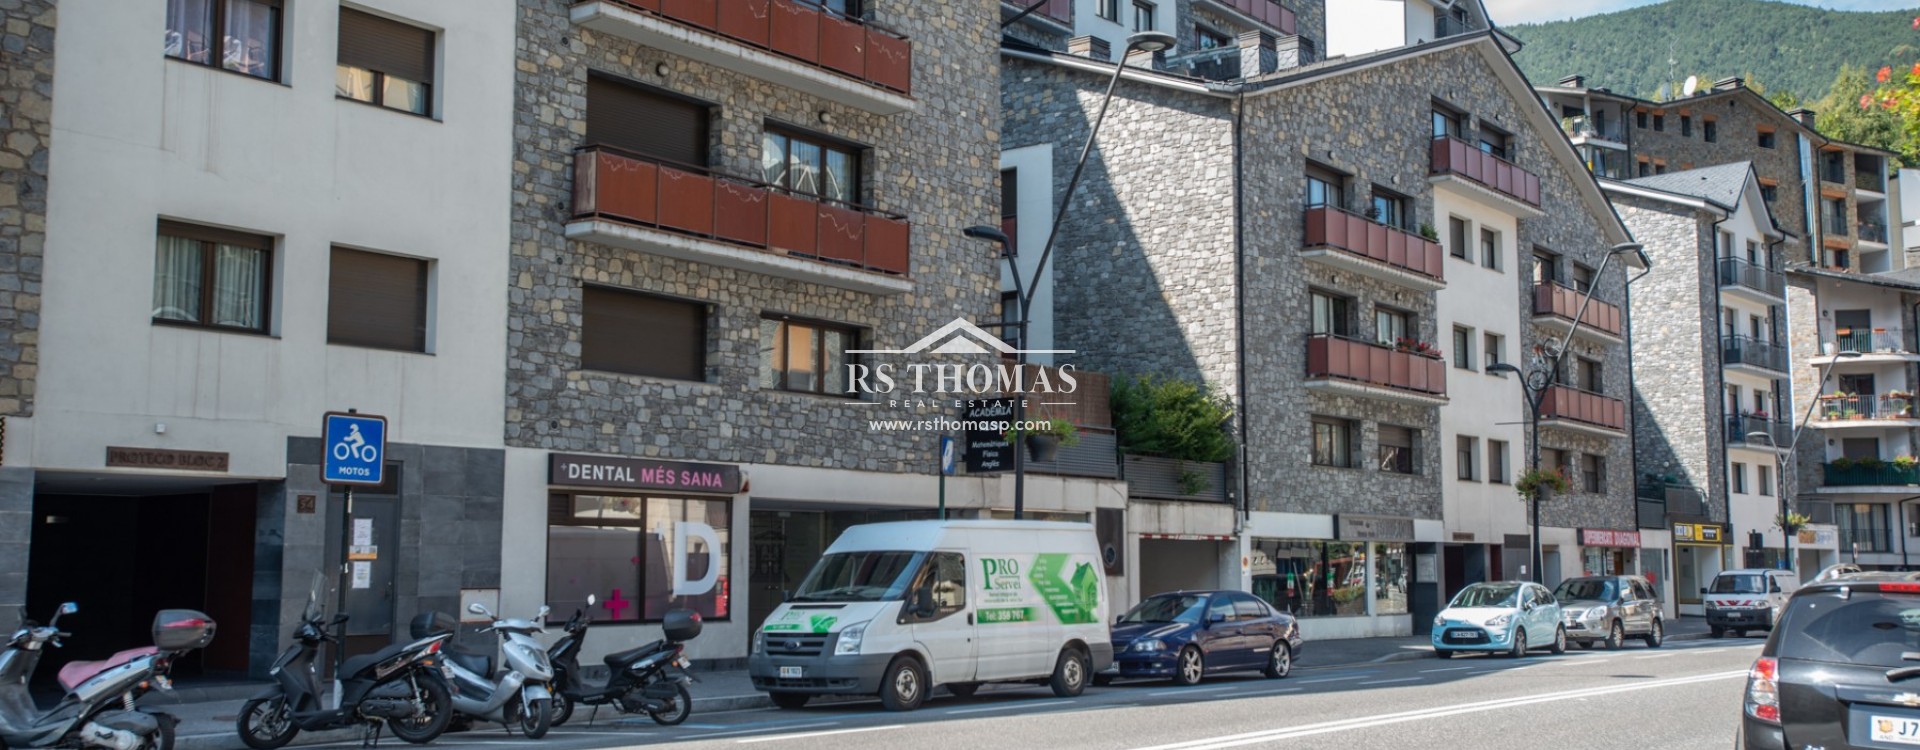 Commercial premises for rent in La Massana